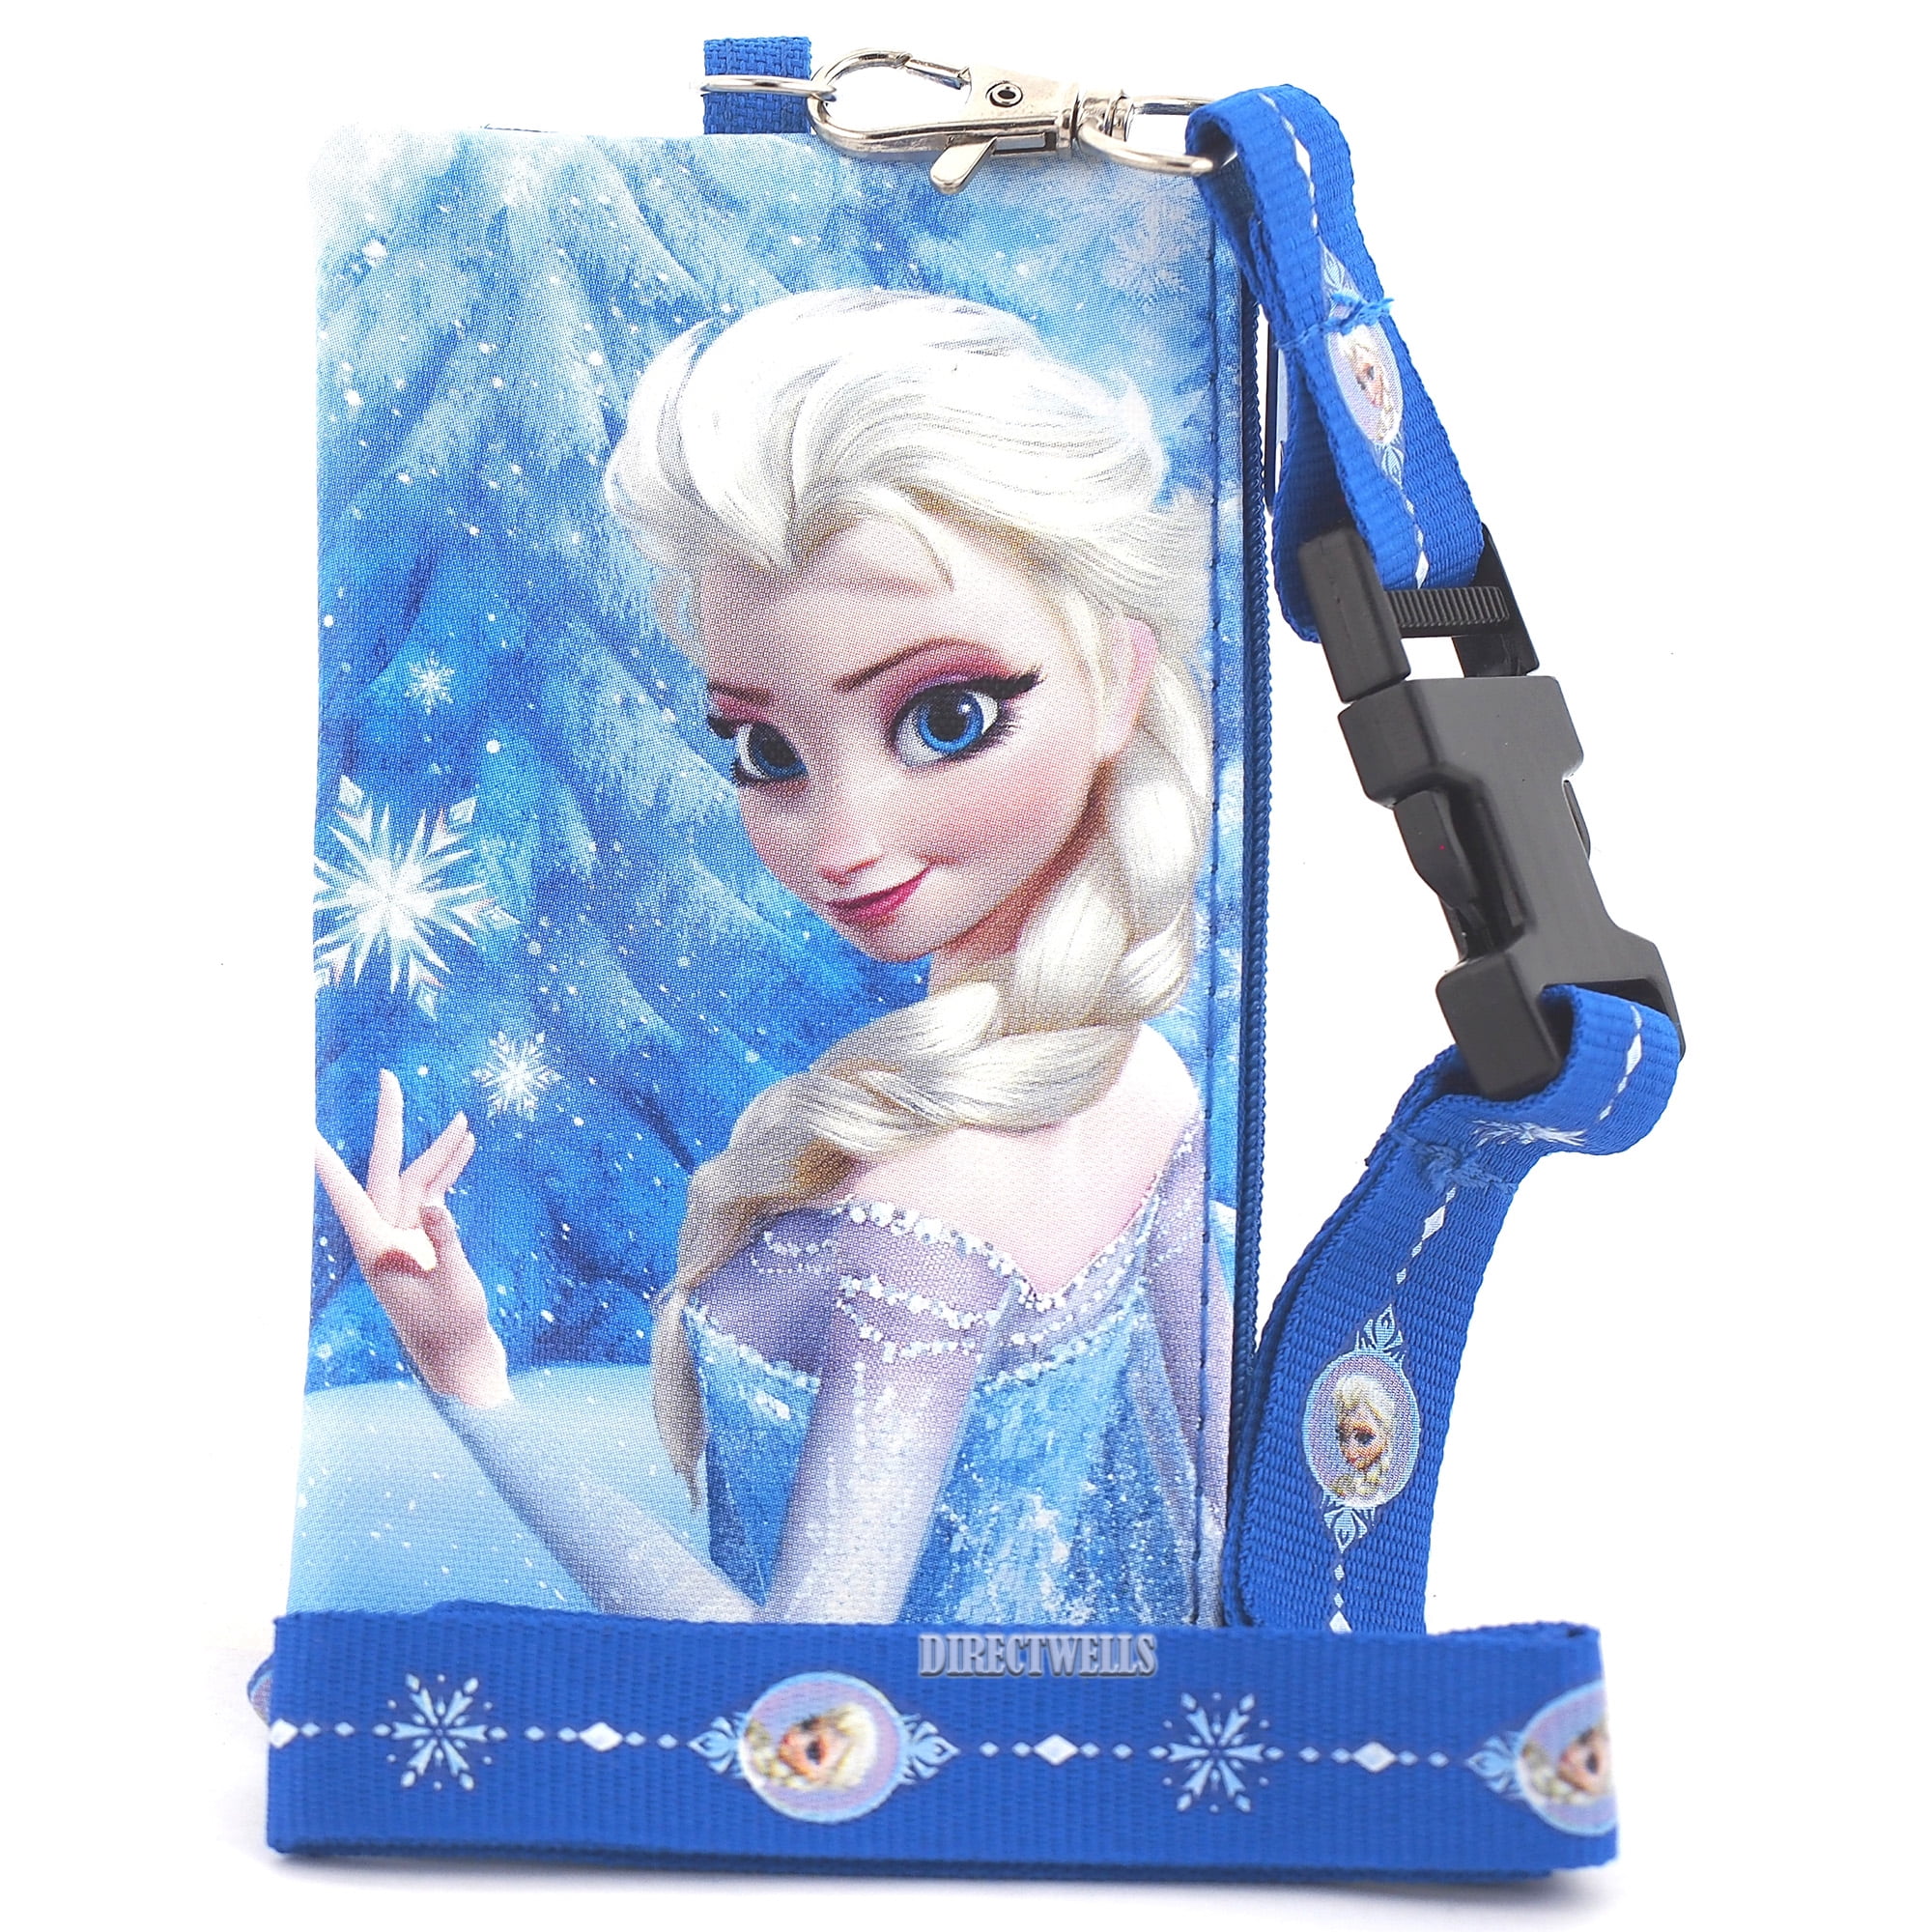 Disney Frozen Elsa Blue Lanyard with Detachable Coin Purse c527be2a 089b 442f 9acb baedbef13de7 1.213a331d544957c0ded7b028dfe2b679